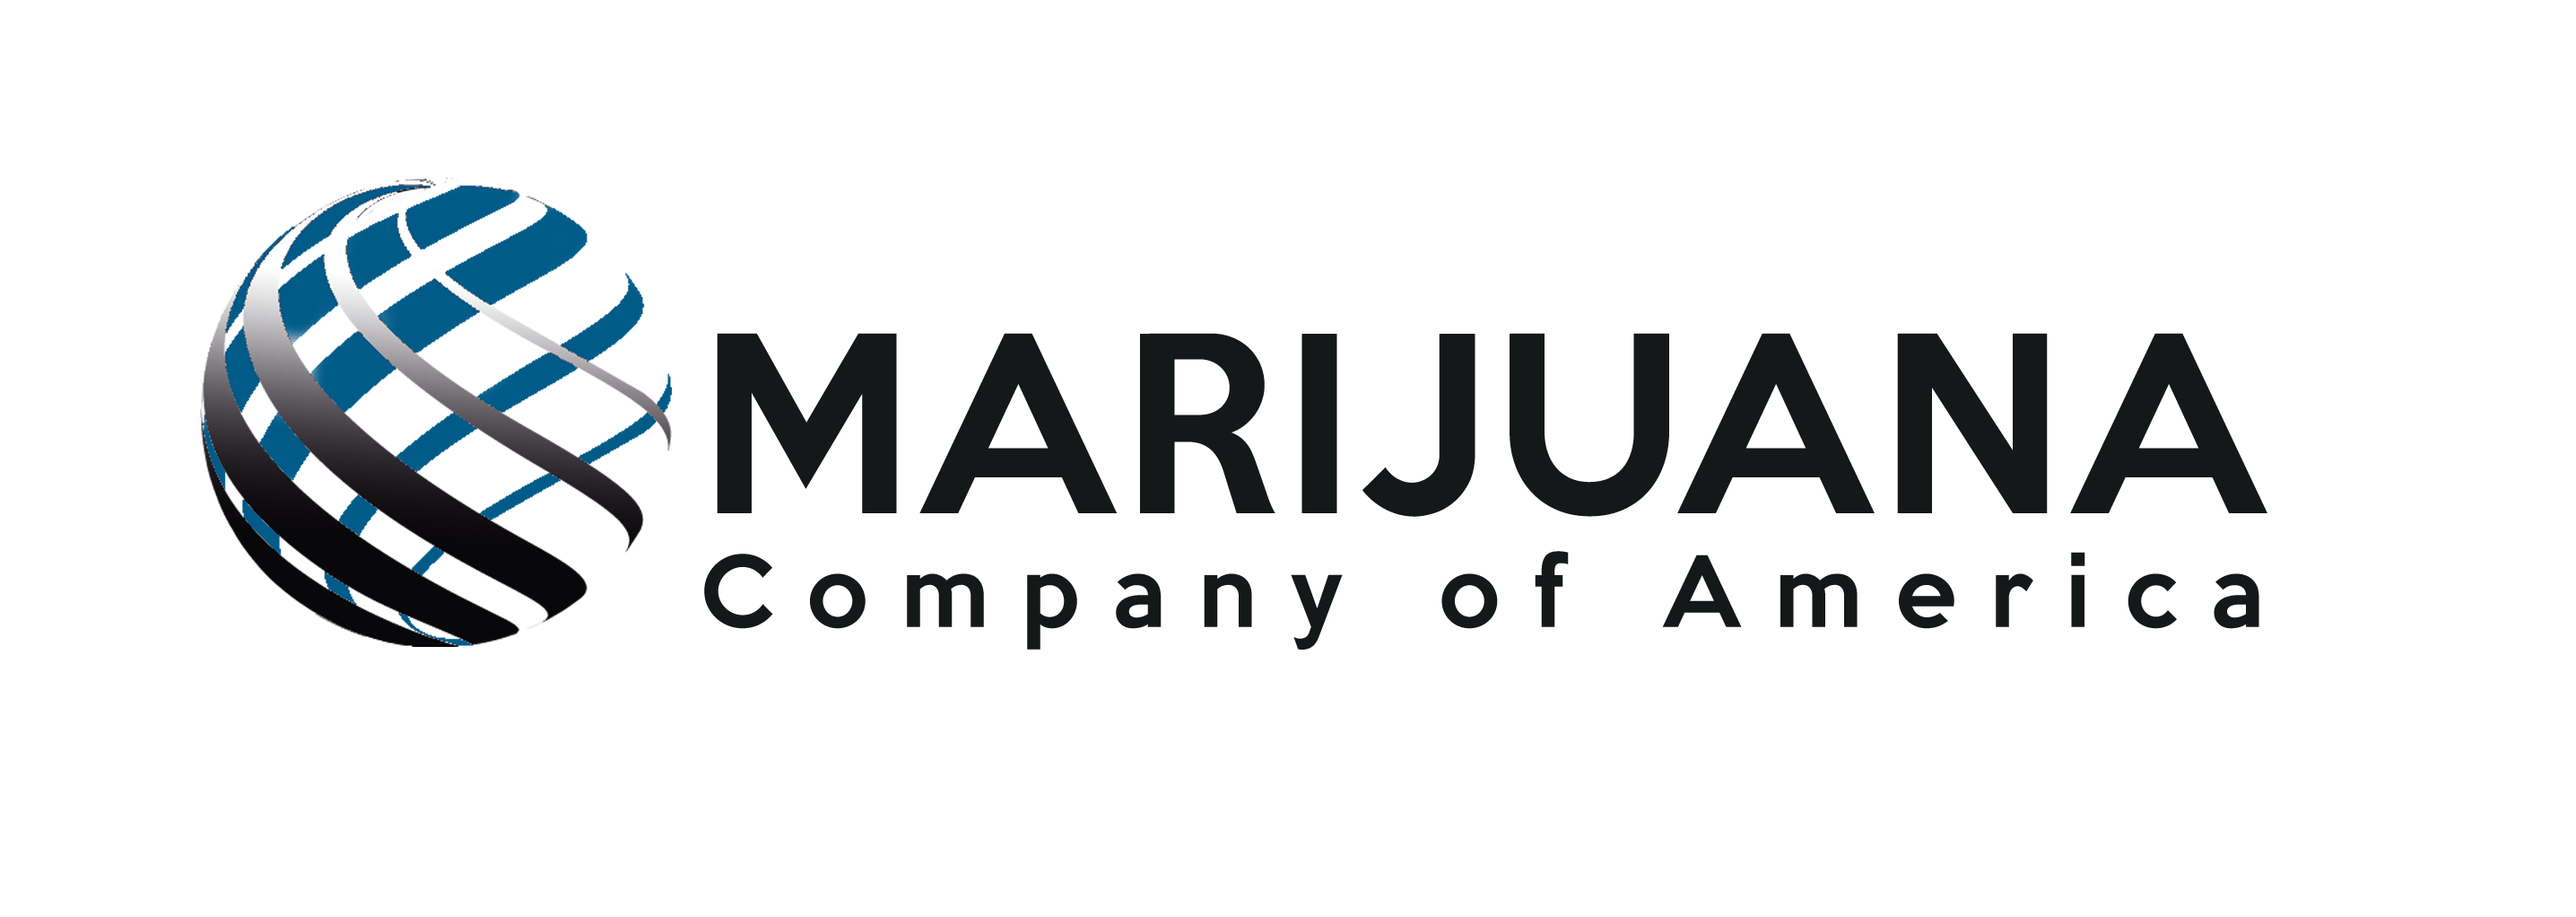 Marijuana Company of America, Inc., Thursday, August 12, 2021, Press release picture